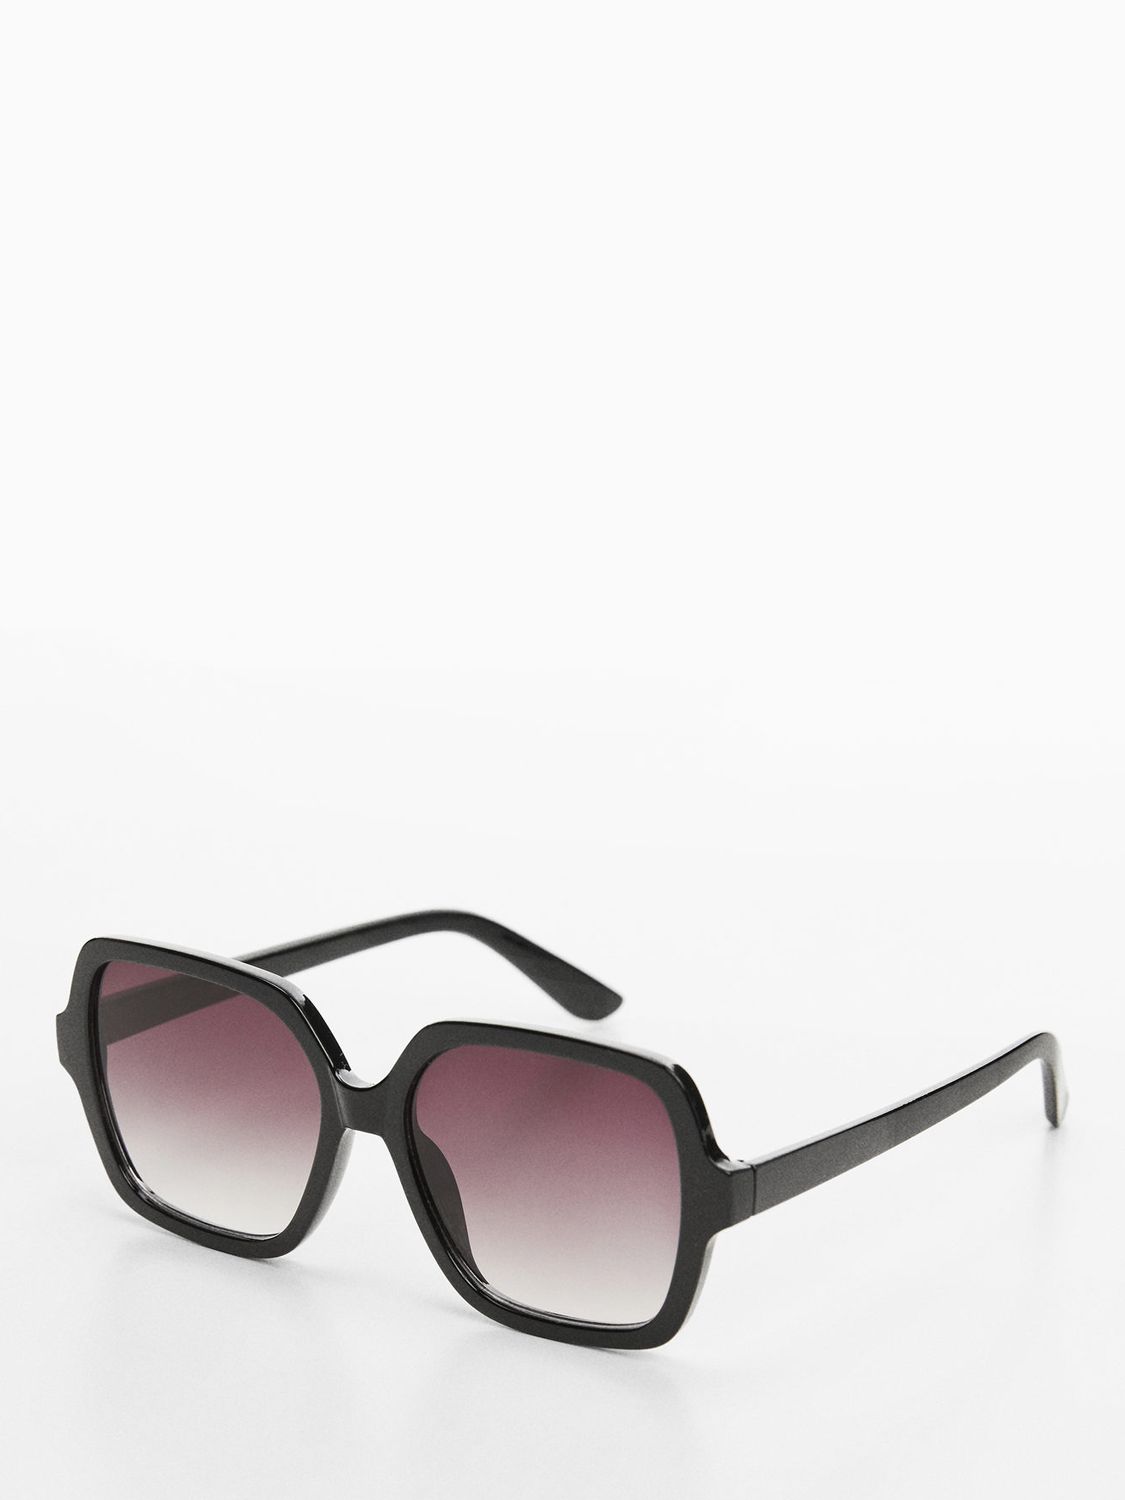 Mango Fernanda Square Tortoiseshell Sunglasses, Black, One Size